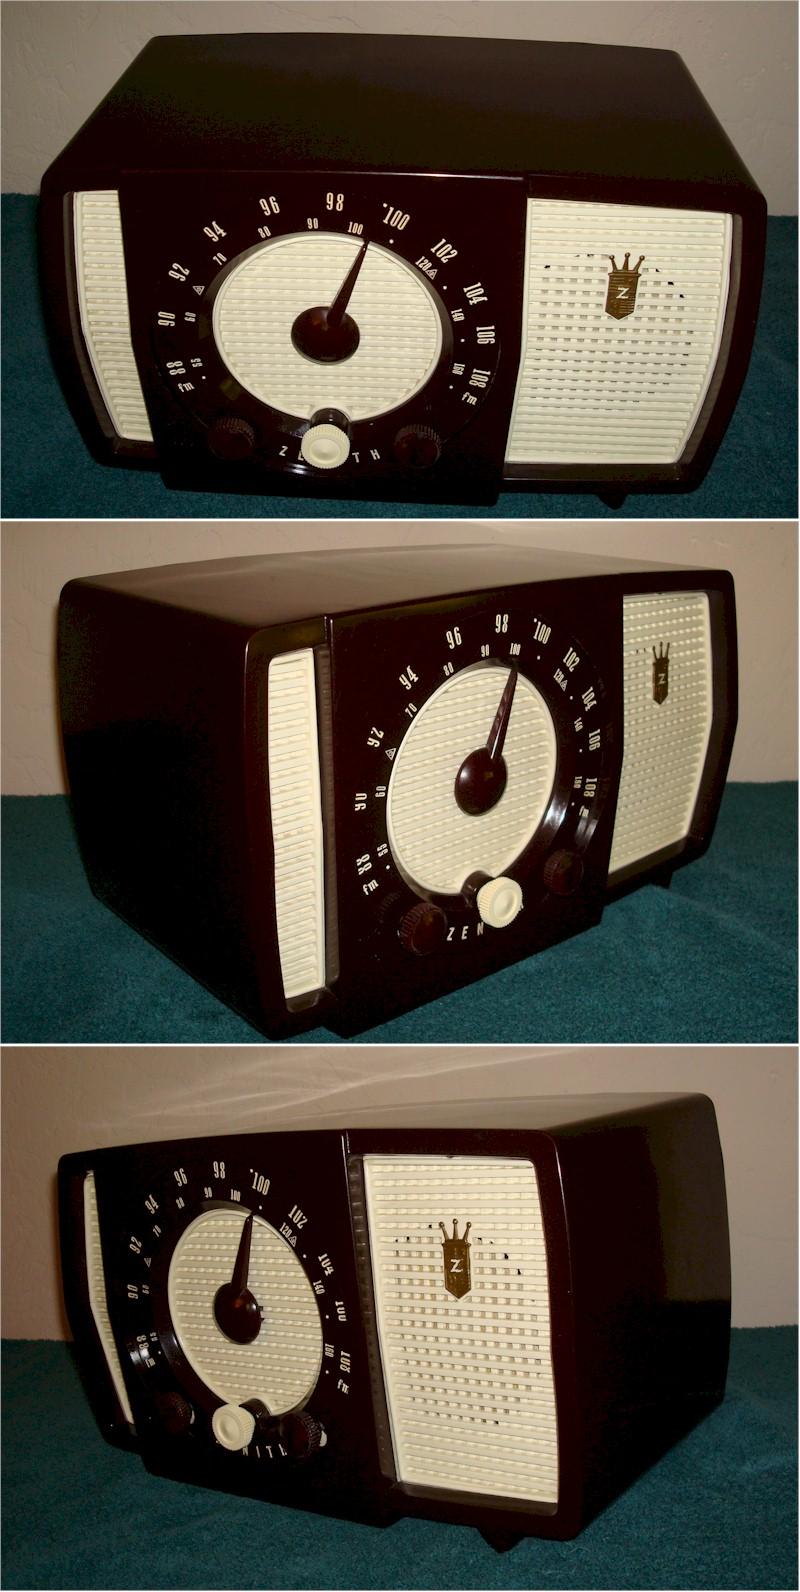 Zenith Y723 AM/FM (1956)